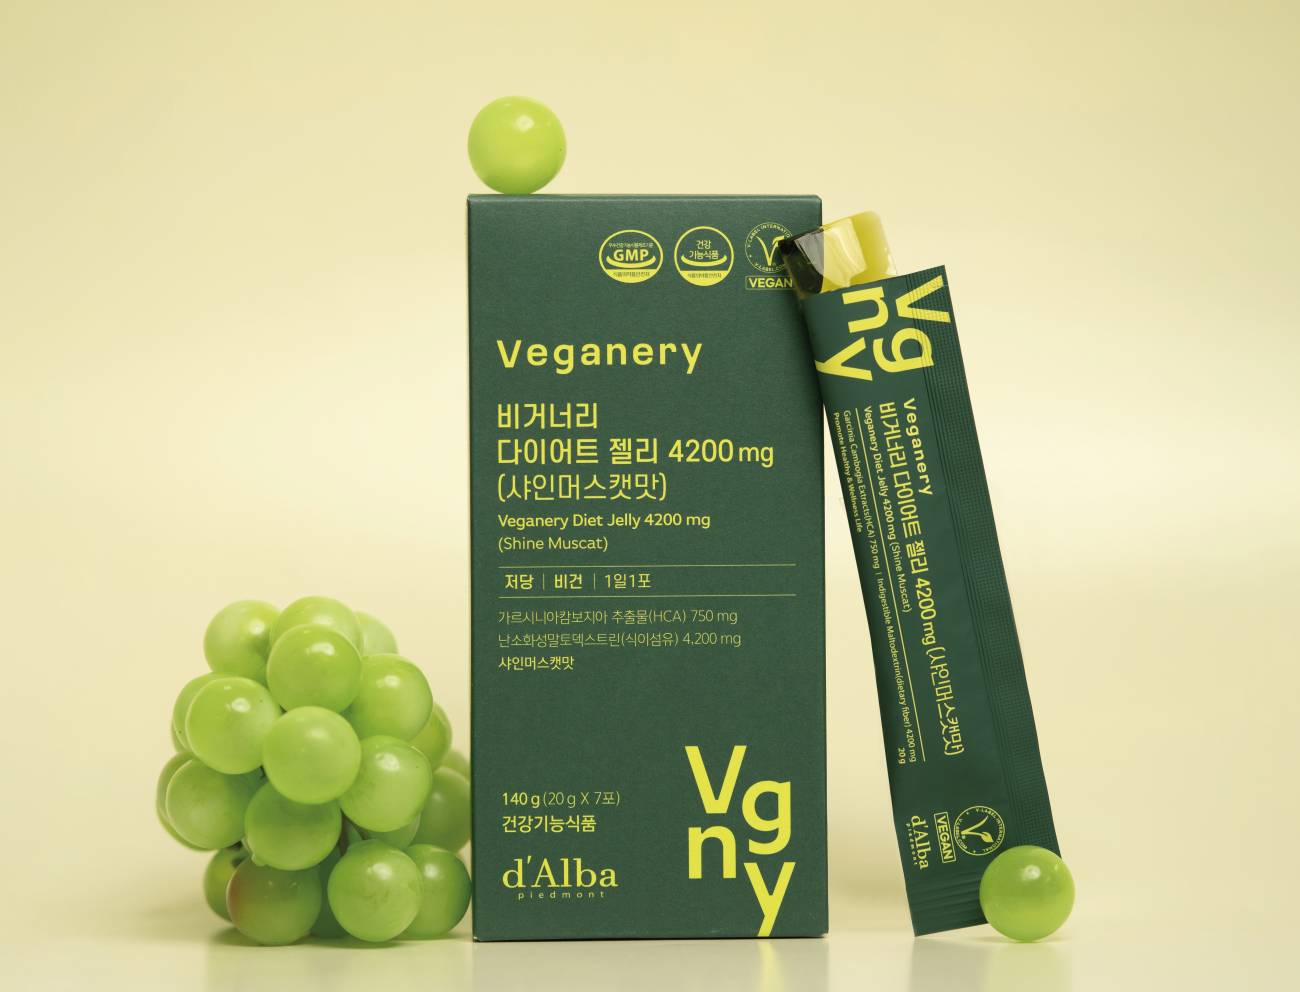 D'ALBA Veganery Diet Jelly 4200mg 1Box (20g x 7ea) - Shine Muscat Flavor - DODOSKIN